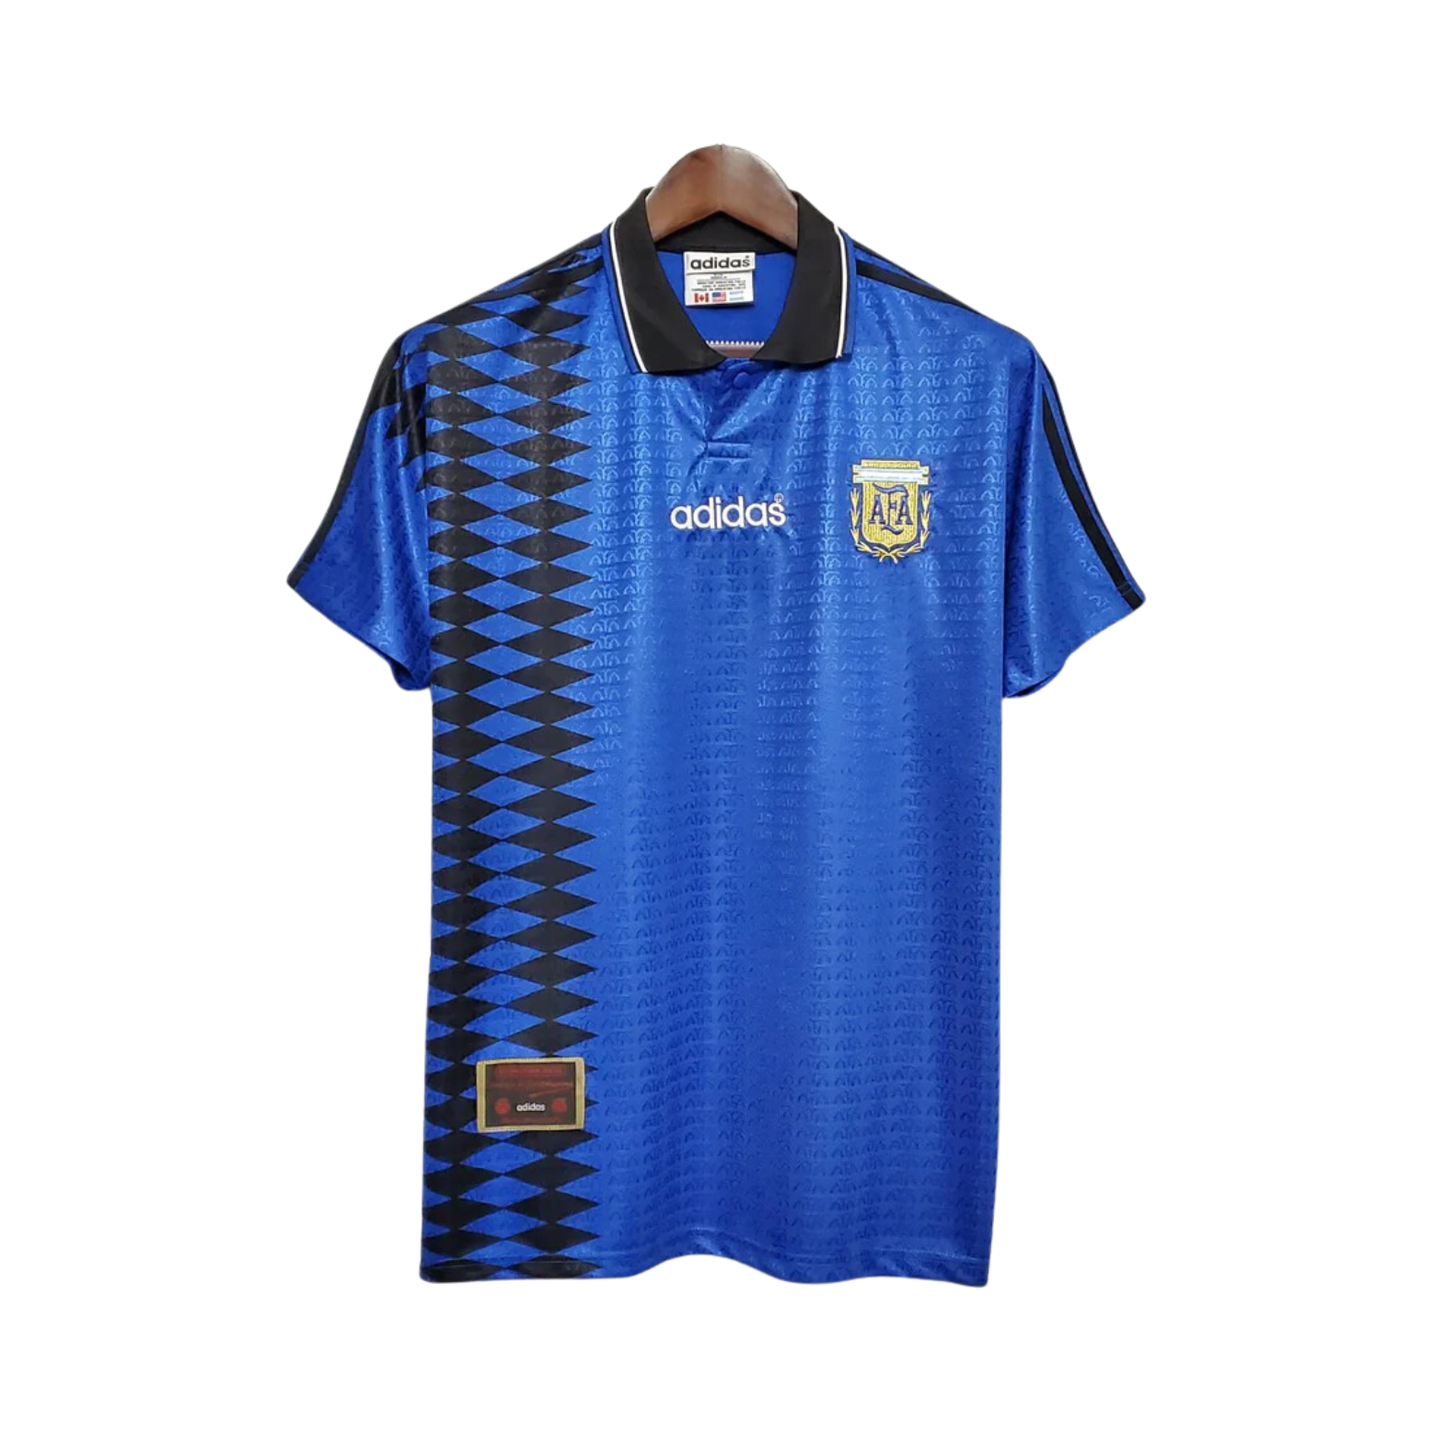 Argentina 1994 Jersey